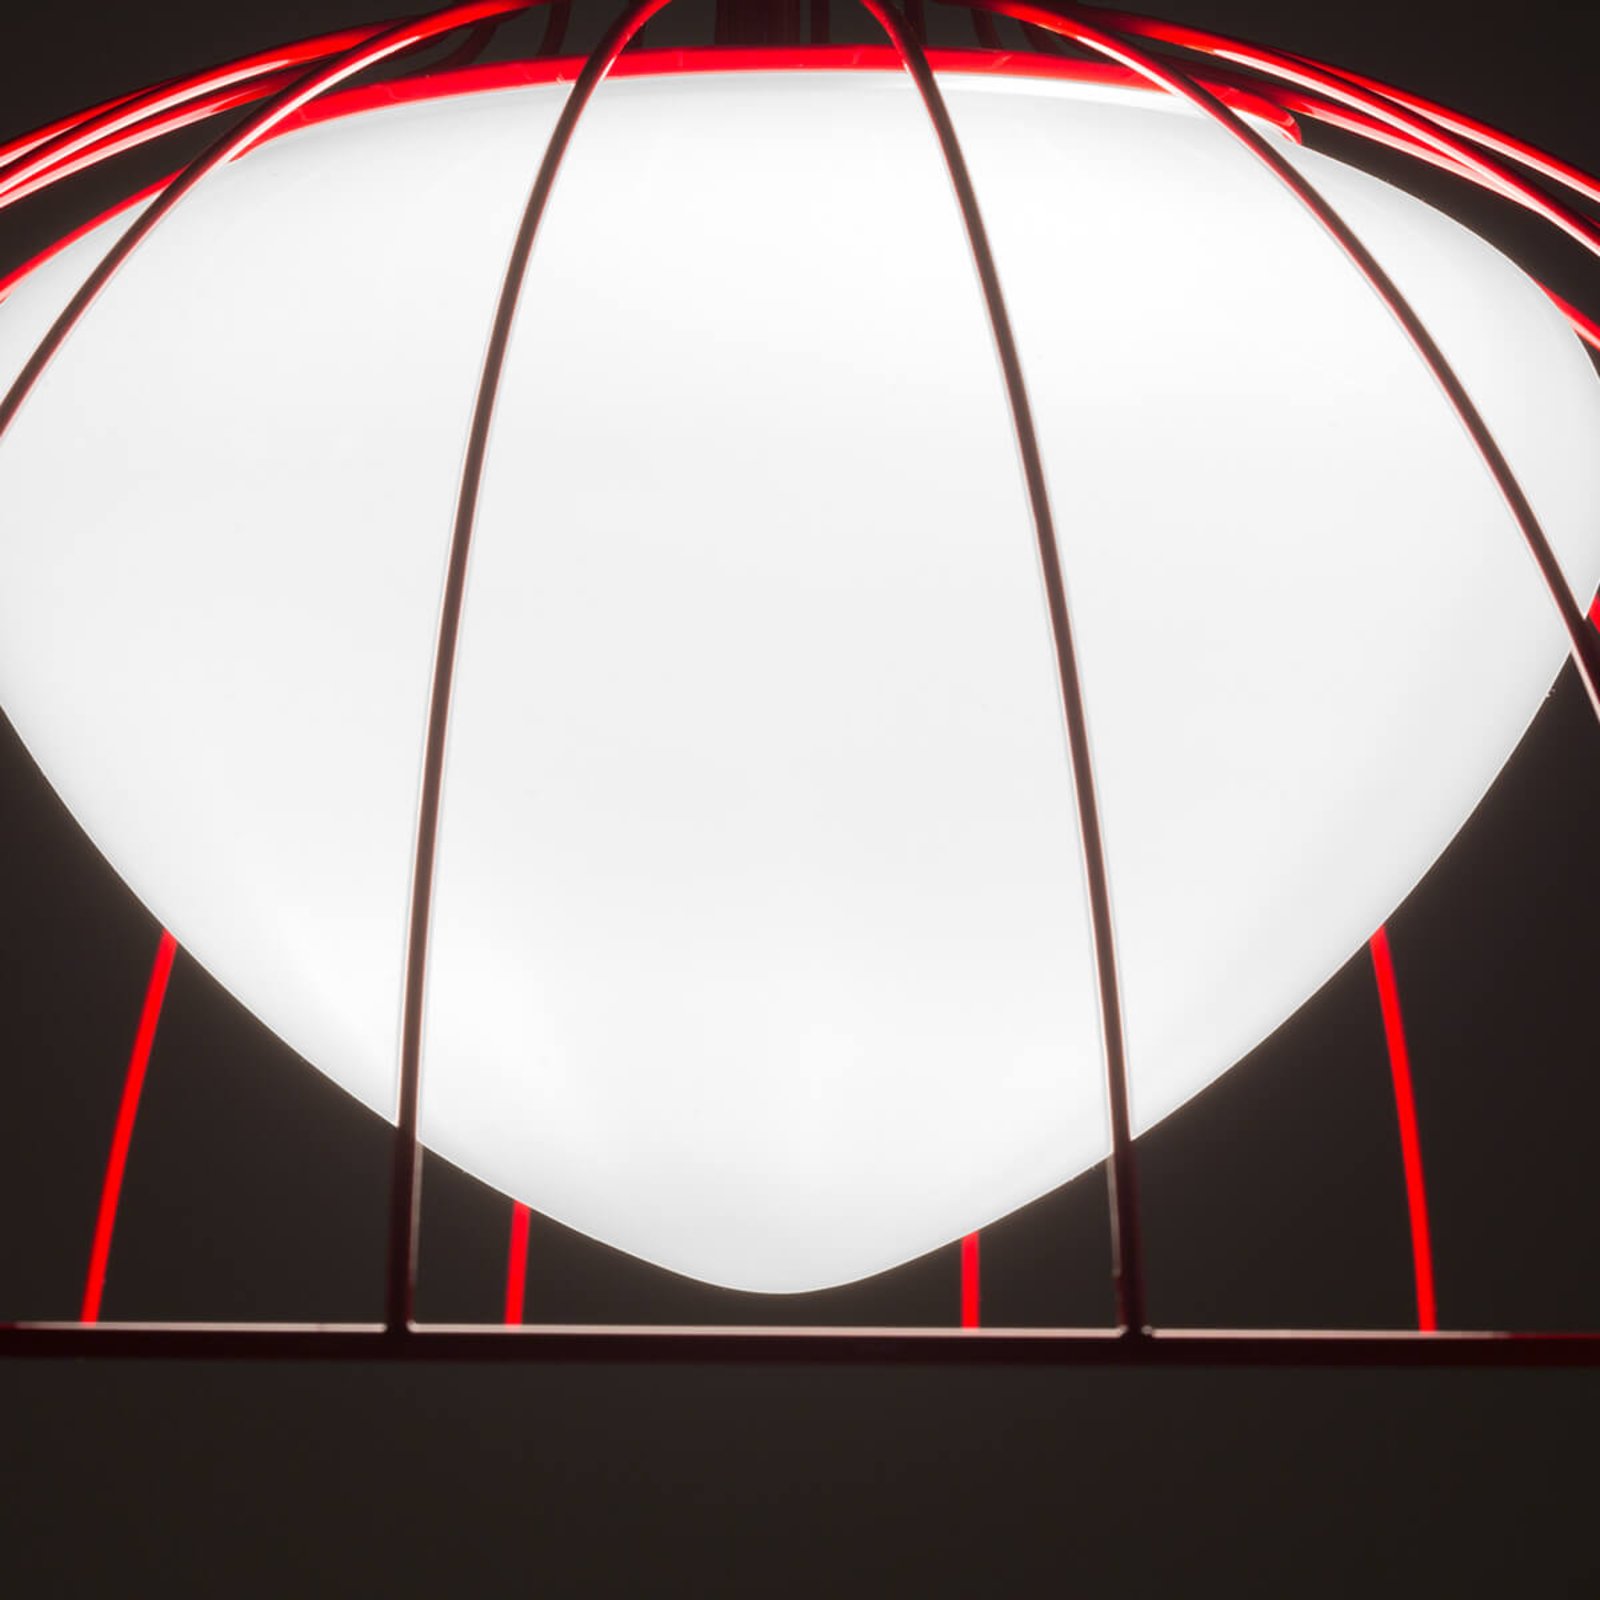 Rode designer-hanglamp Lab - made in Italy